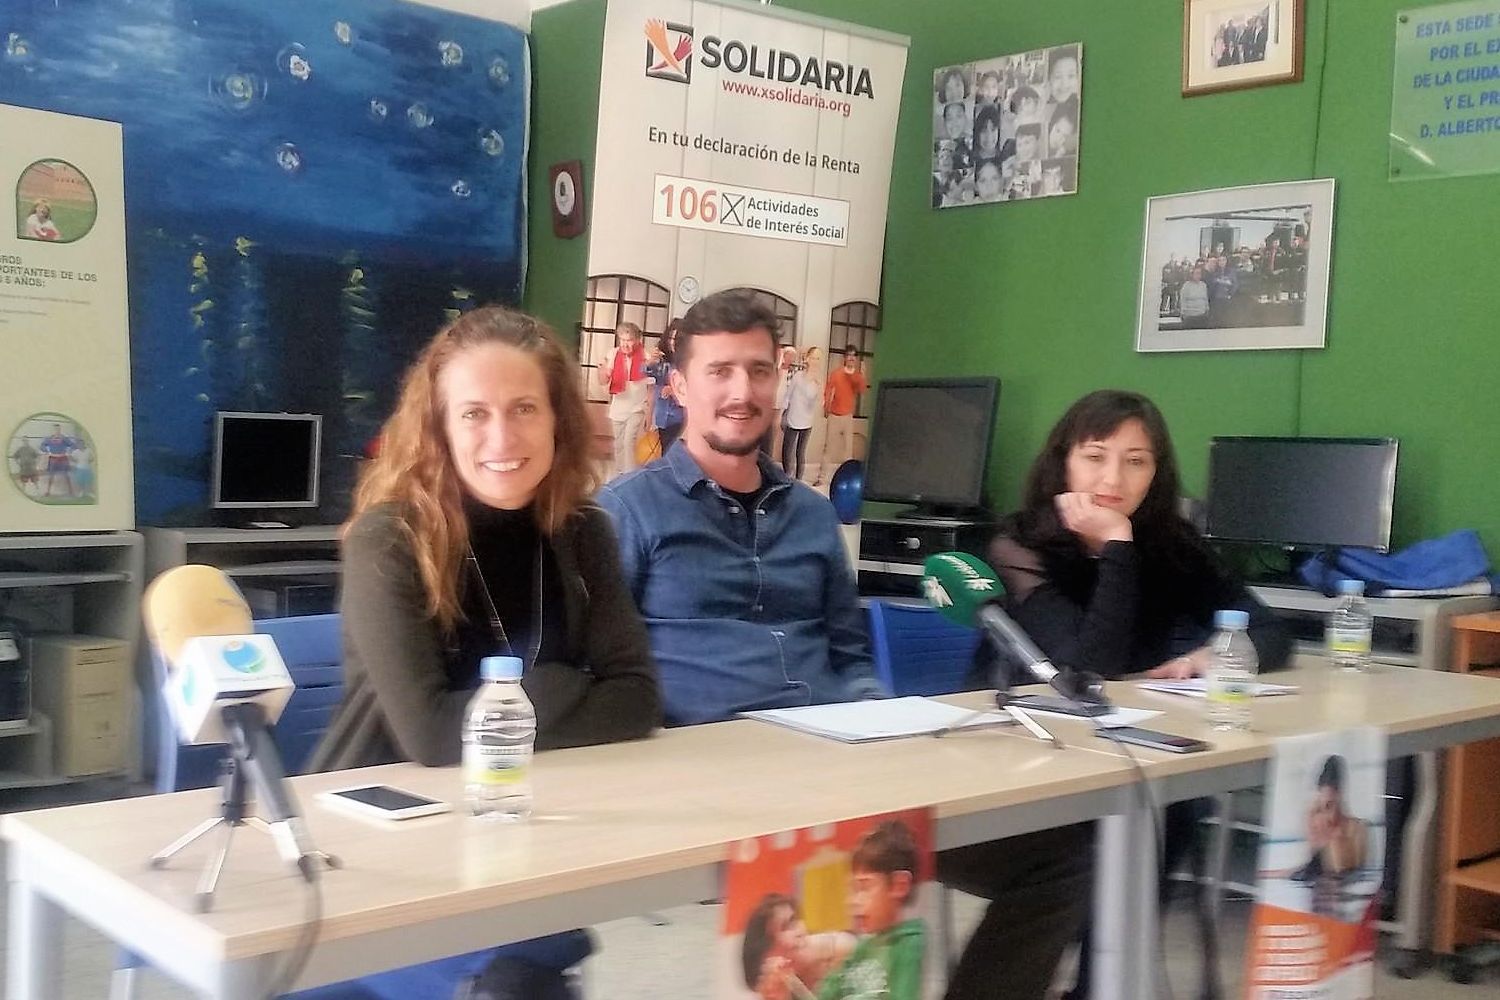 Rueda de prensa "X Solidaria" Melilla